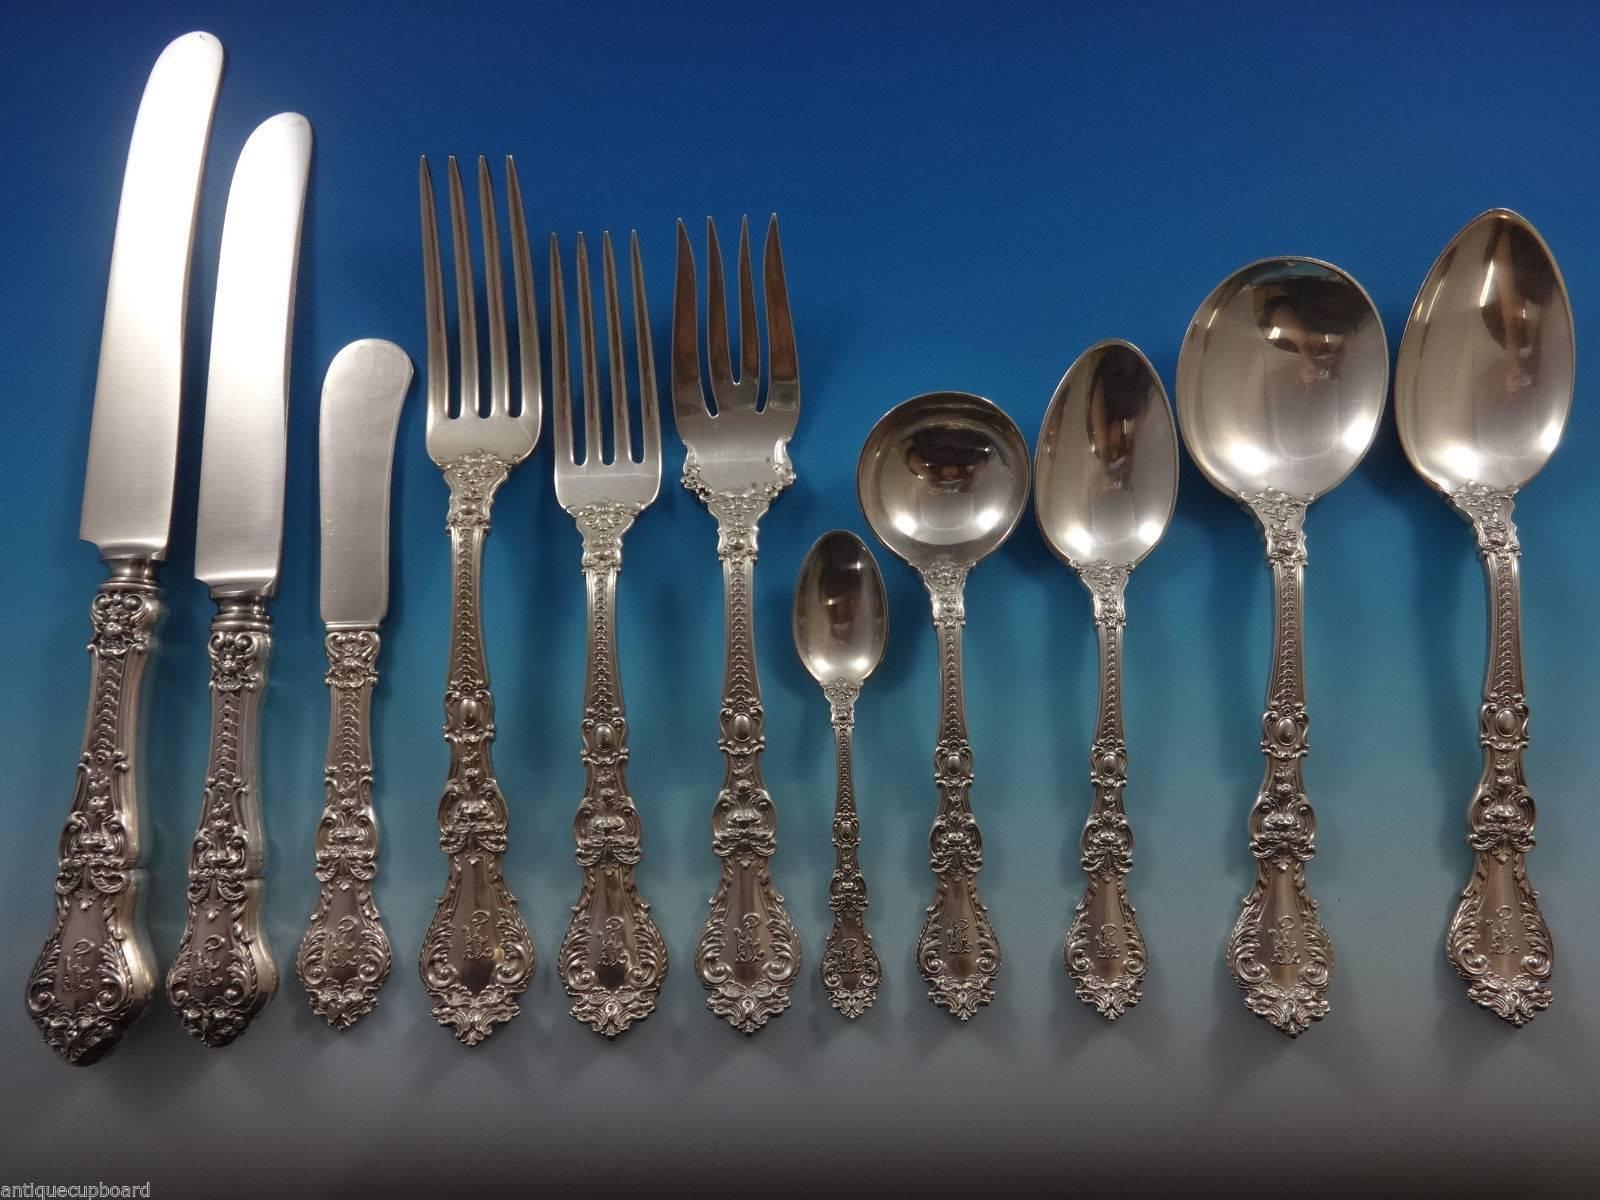 Henry II by Gorham Dinner & Luncheon size Sterling Silver flatware set includes: 18 DINNER SIZE KNIVES, 9 3/4", 18 DINNER SIZE FORKS, 7 3/4", 18 LUNCHEON KNIVES, 8 3/4", 18 LUNCHEON FORKS, 7", 18 LARGE SALAD/FISH FORKS, 7